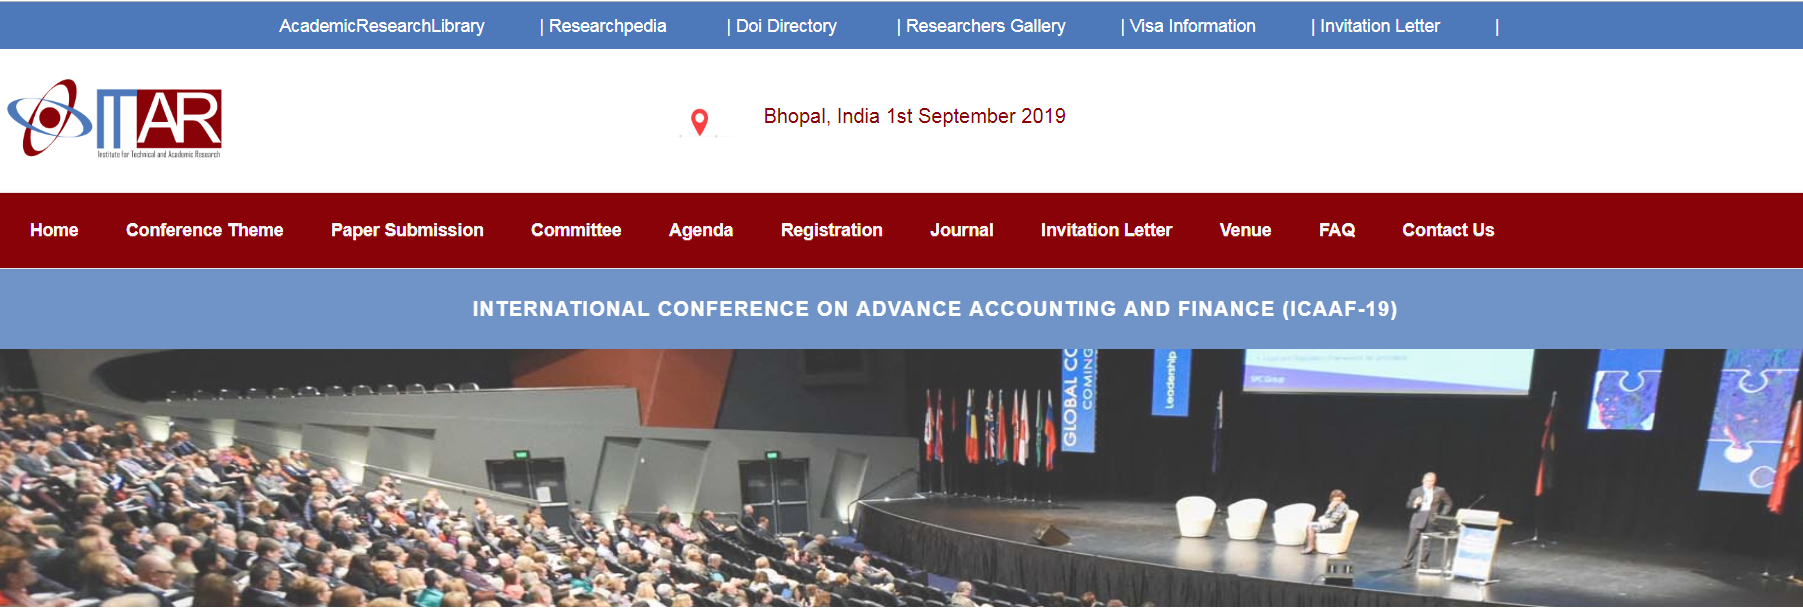 International Conference on Advance Accounting and Finance (ICAAF-19), Bhopal, Madhya Pradesh, India